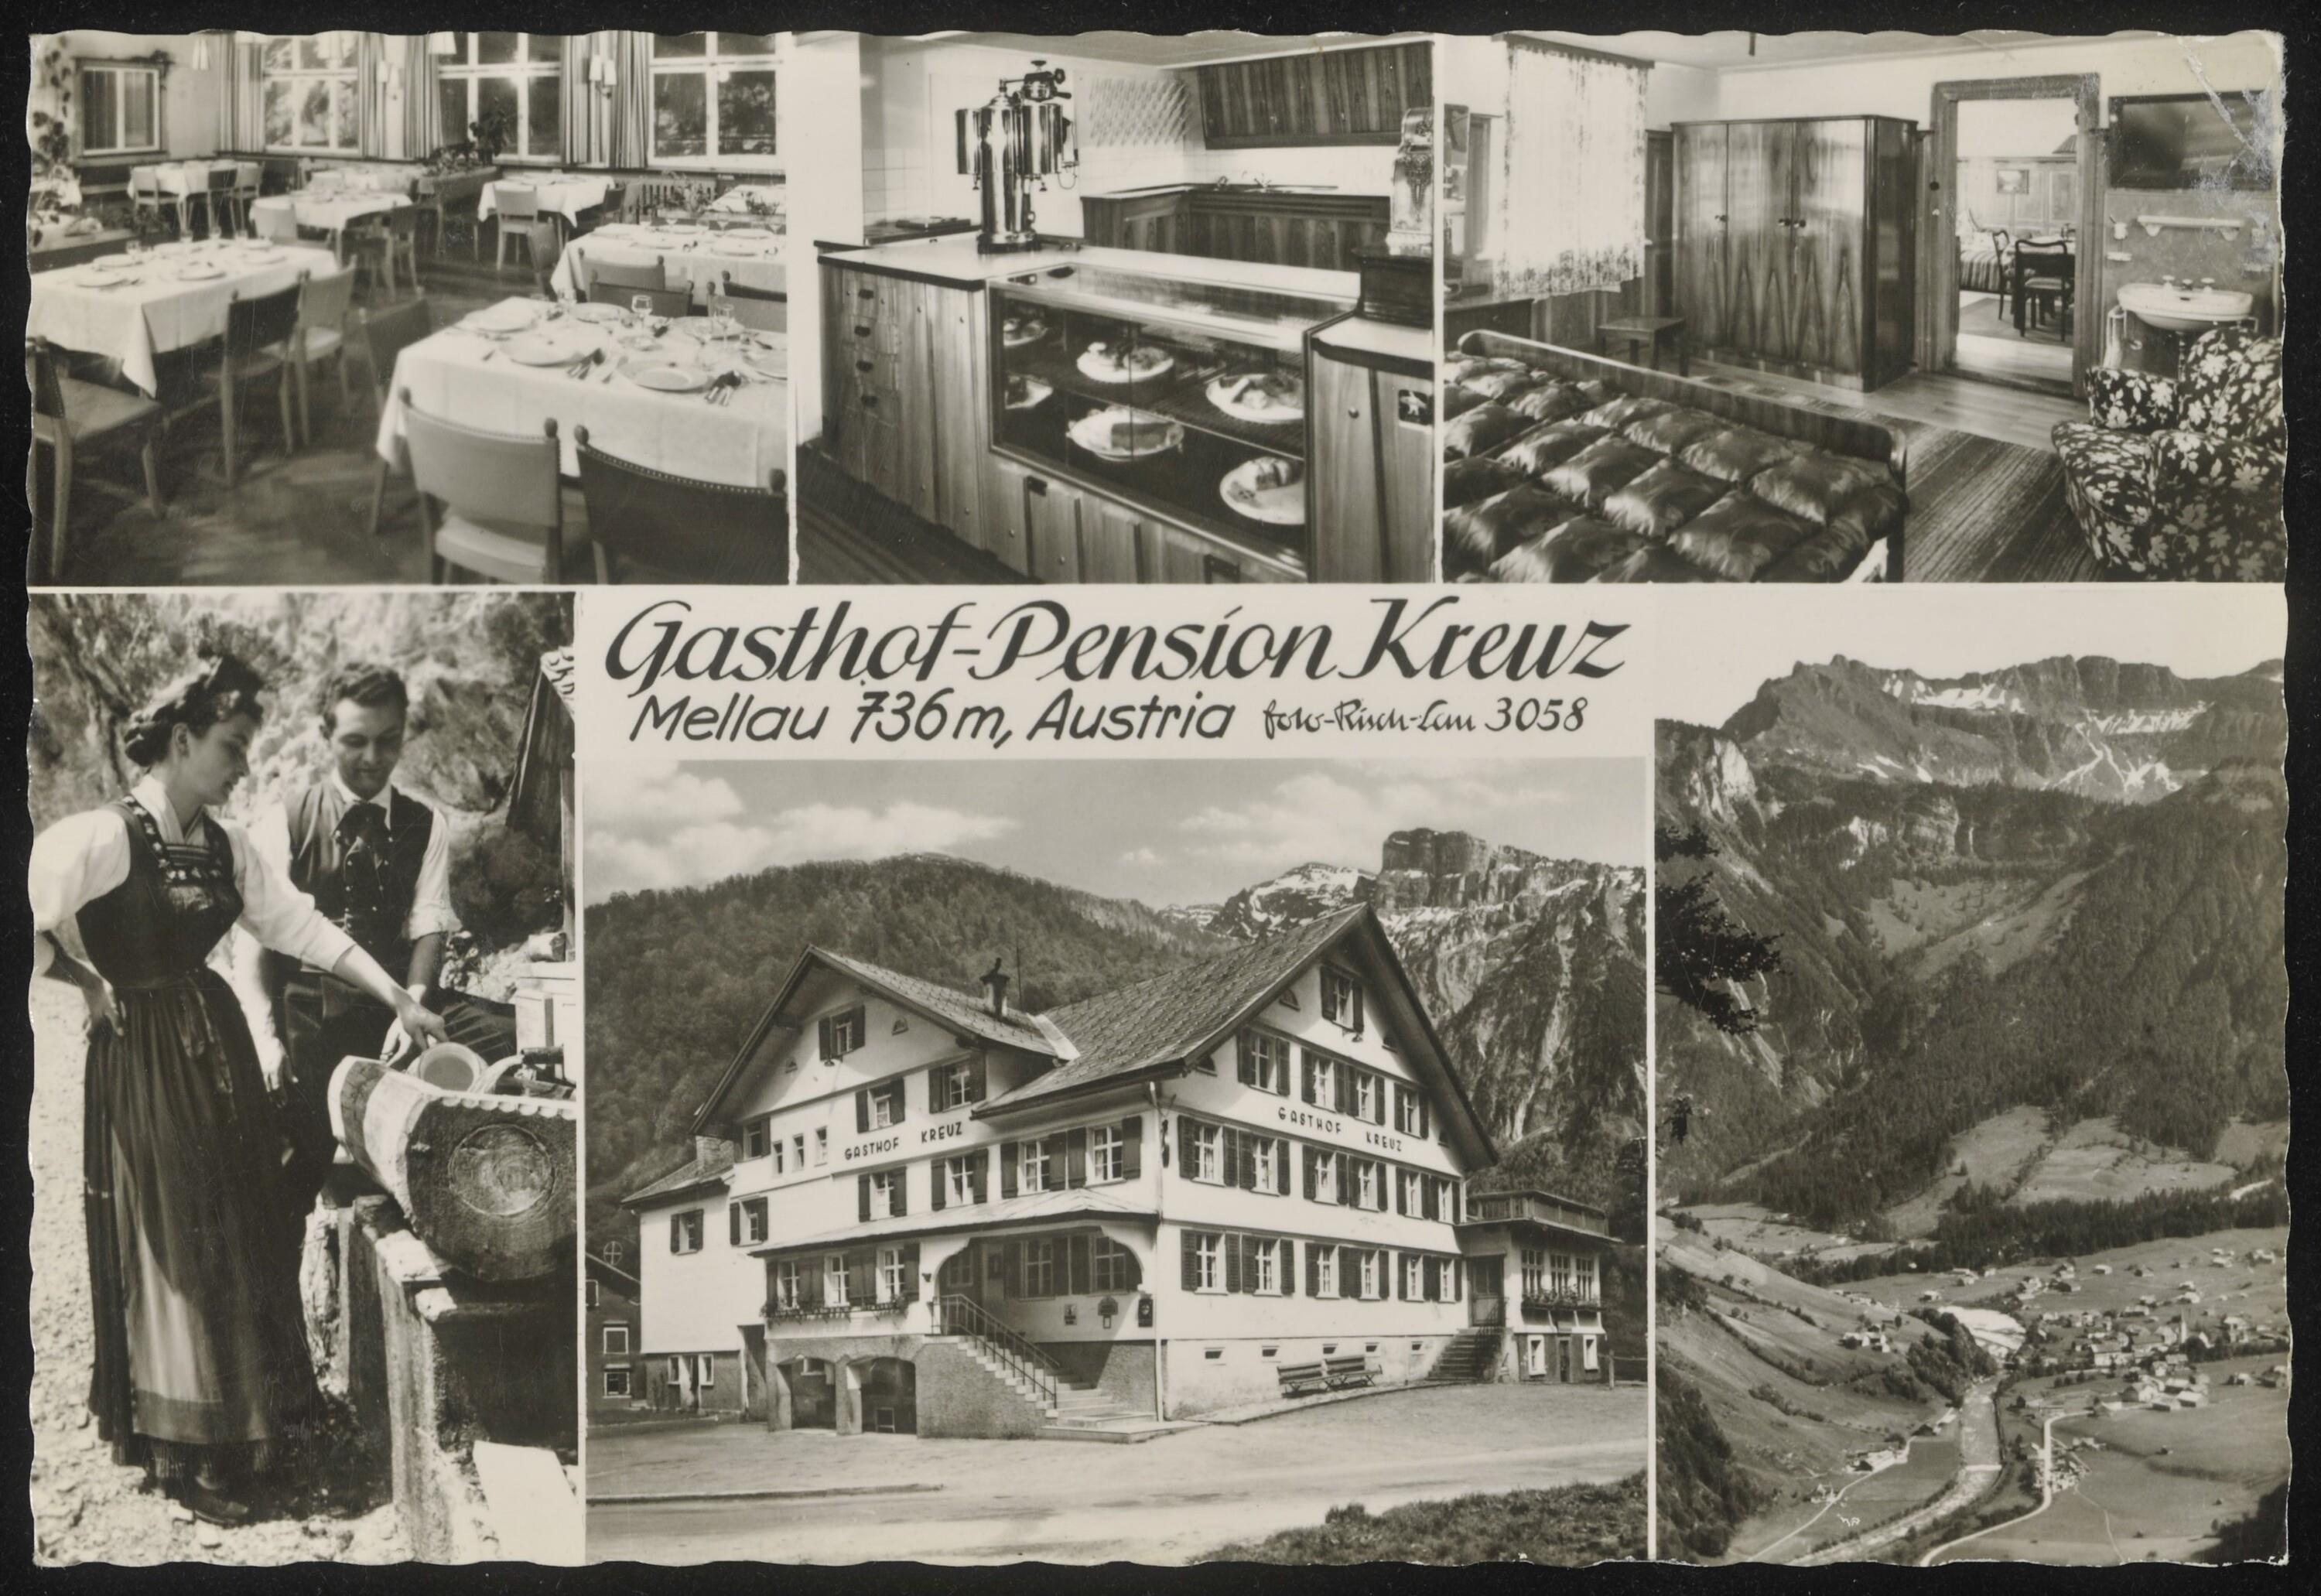 Gasthof-Pension Kreuz Mellau 736 m, Austria></div>


    <hr>
    <div class=